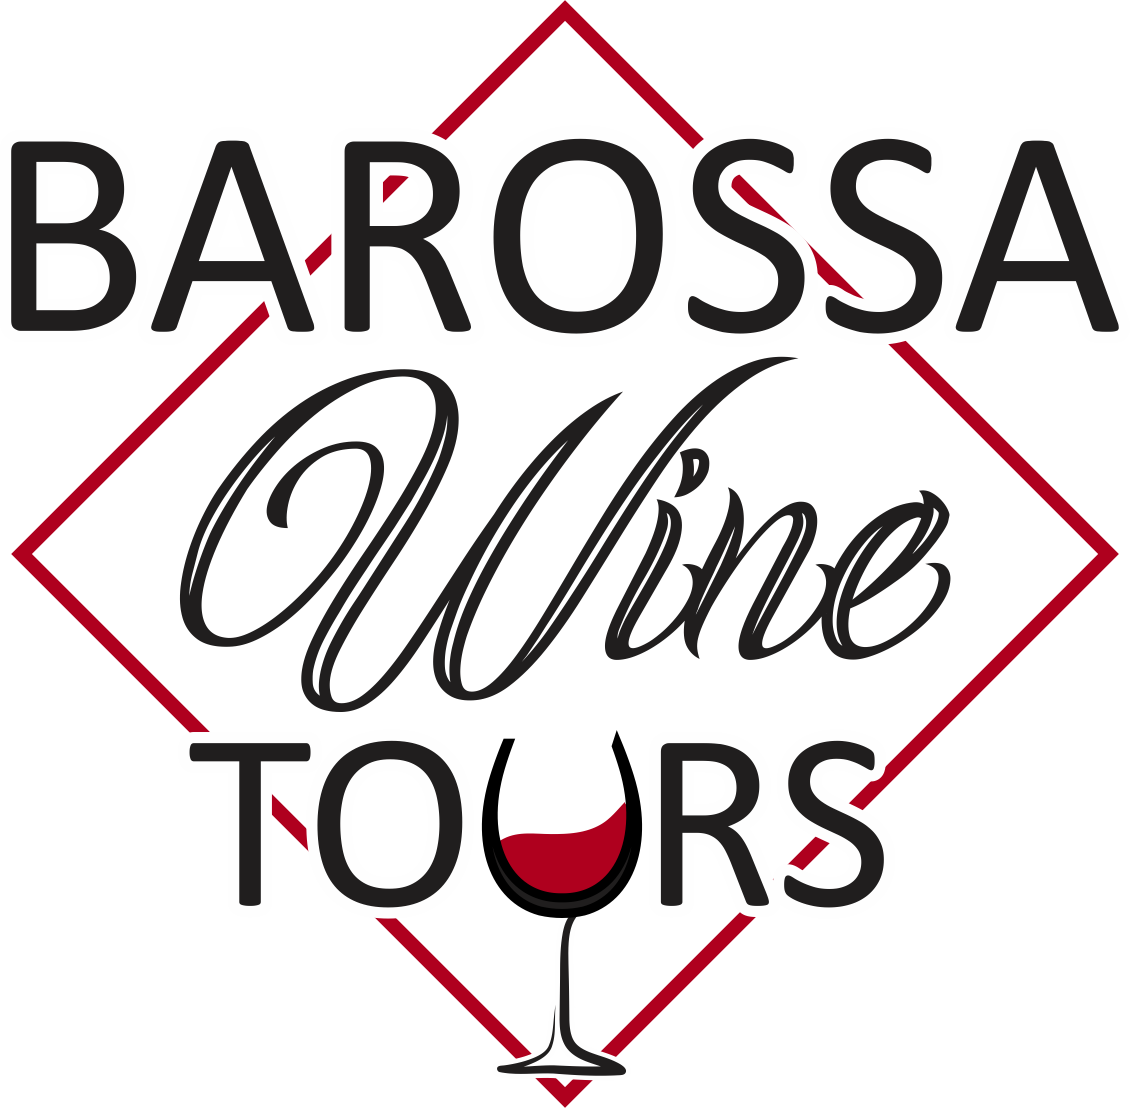 Barossa Wine Tours